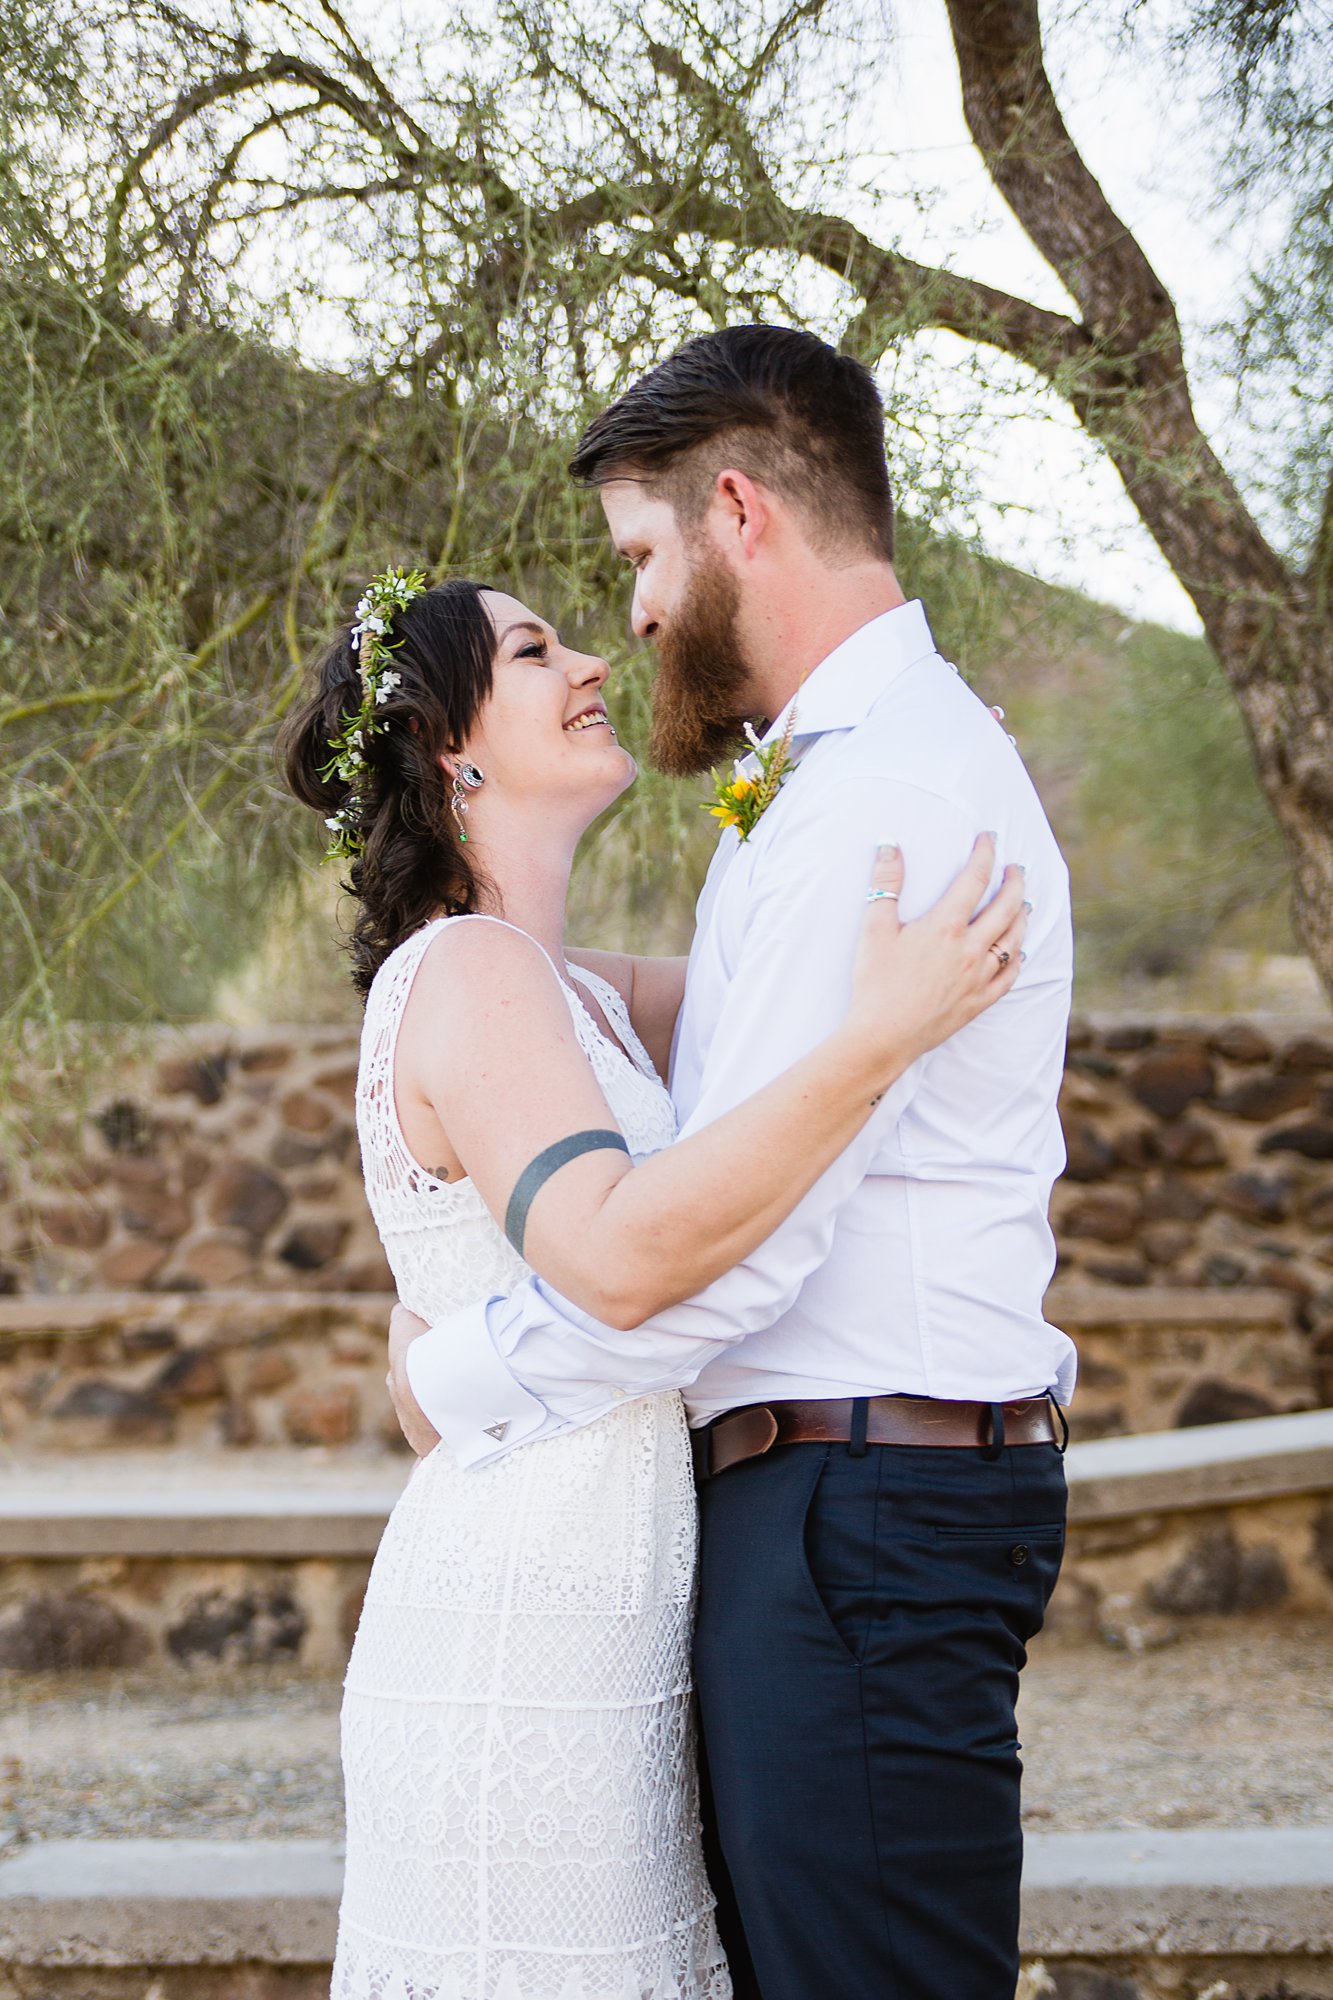 Simple boho bride and groom in the Arizona desert by Phoenix wedding photographers PMA Photography.